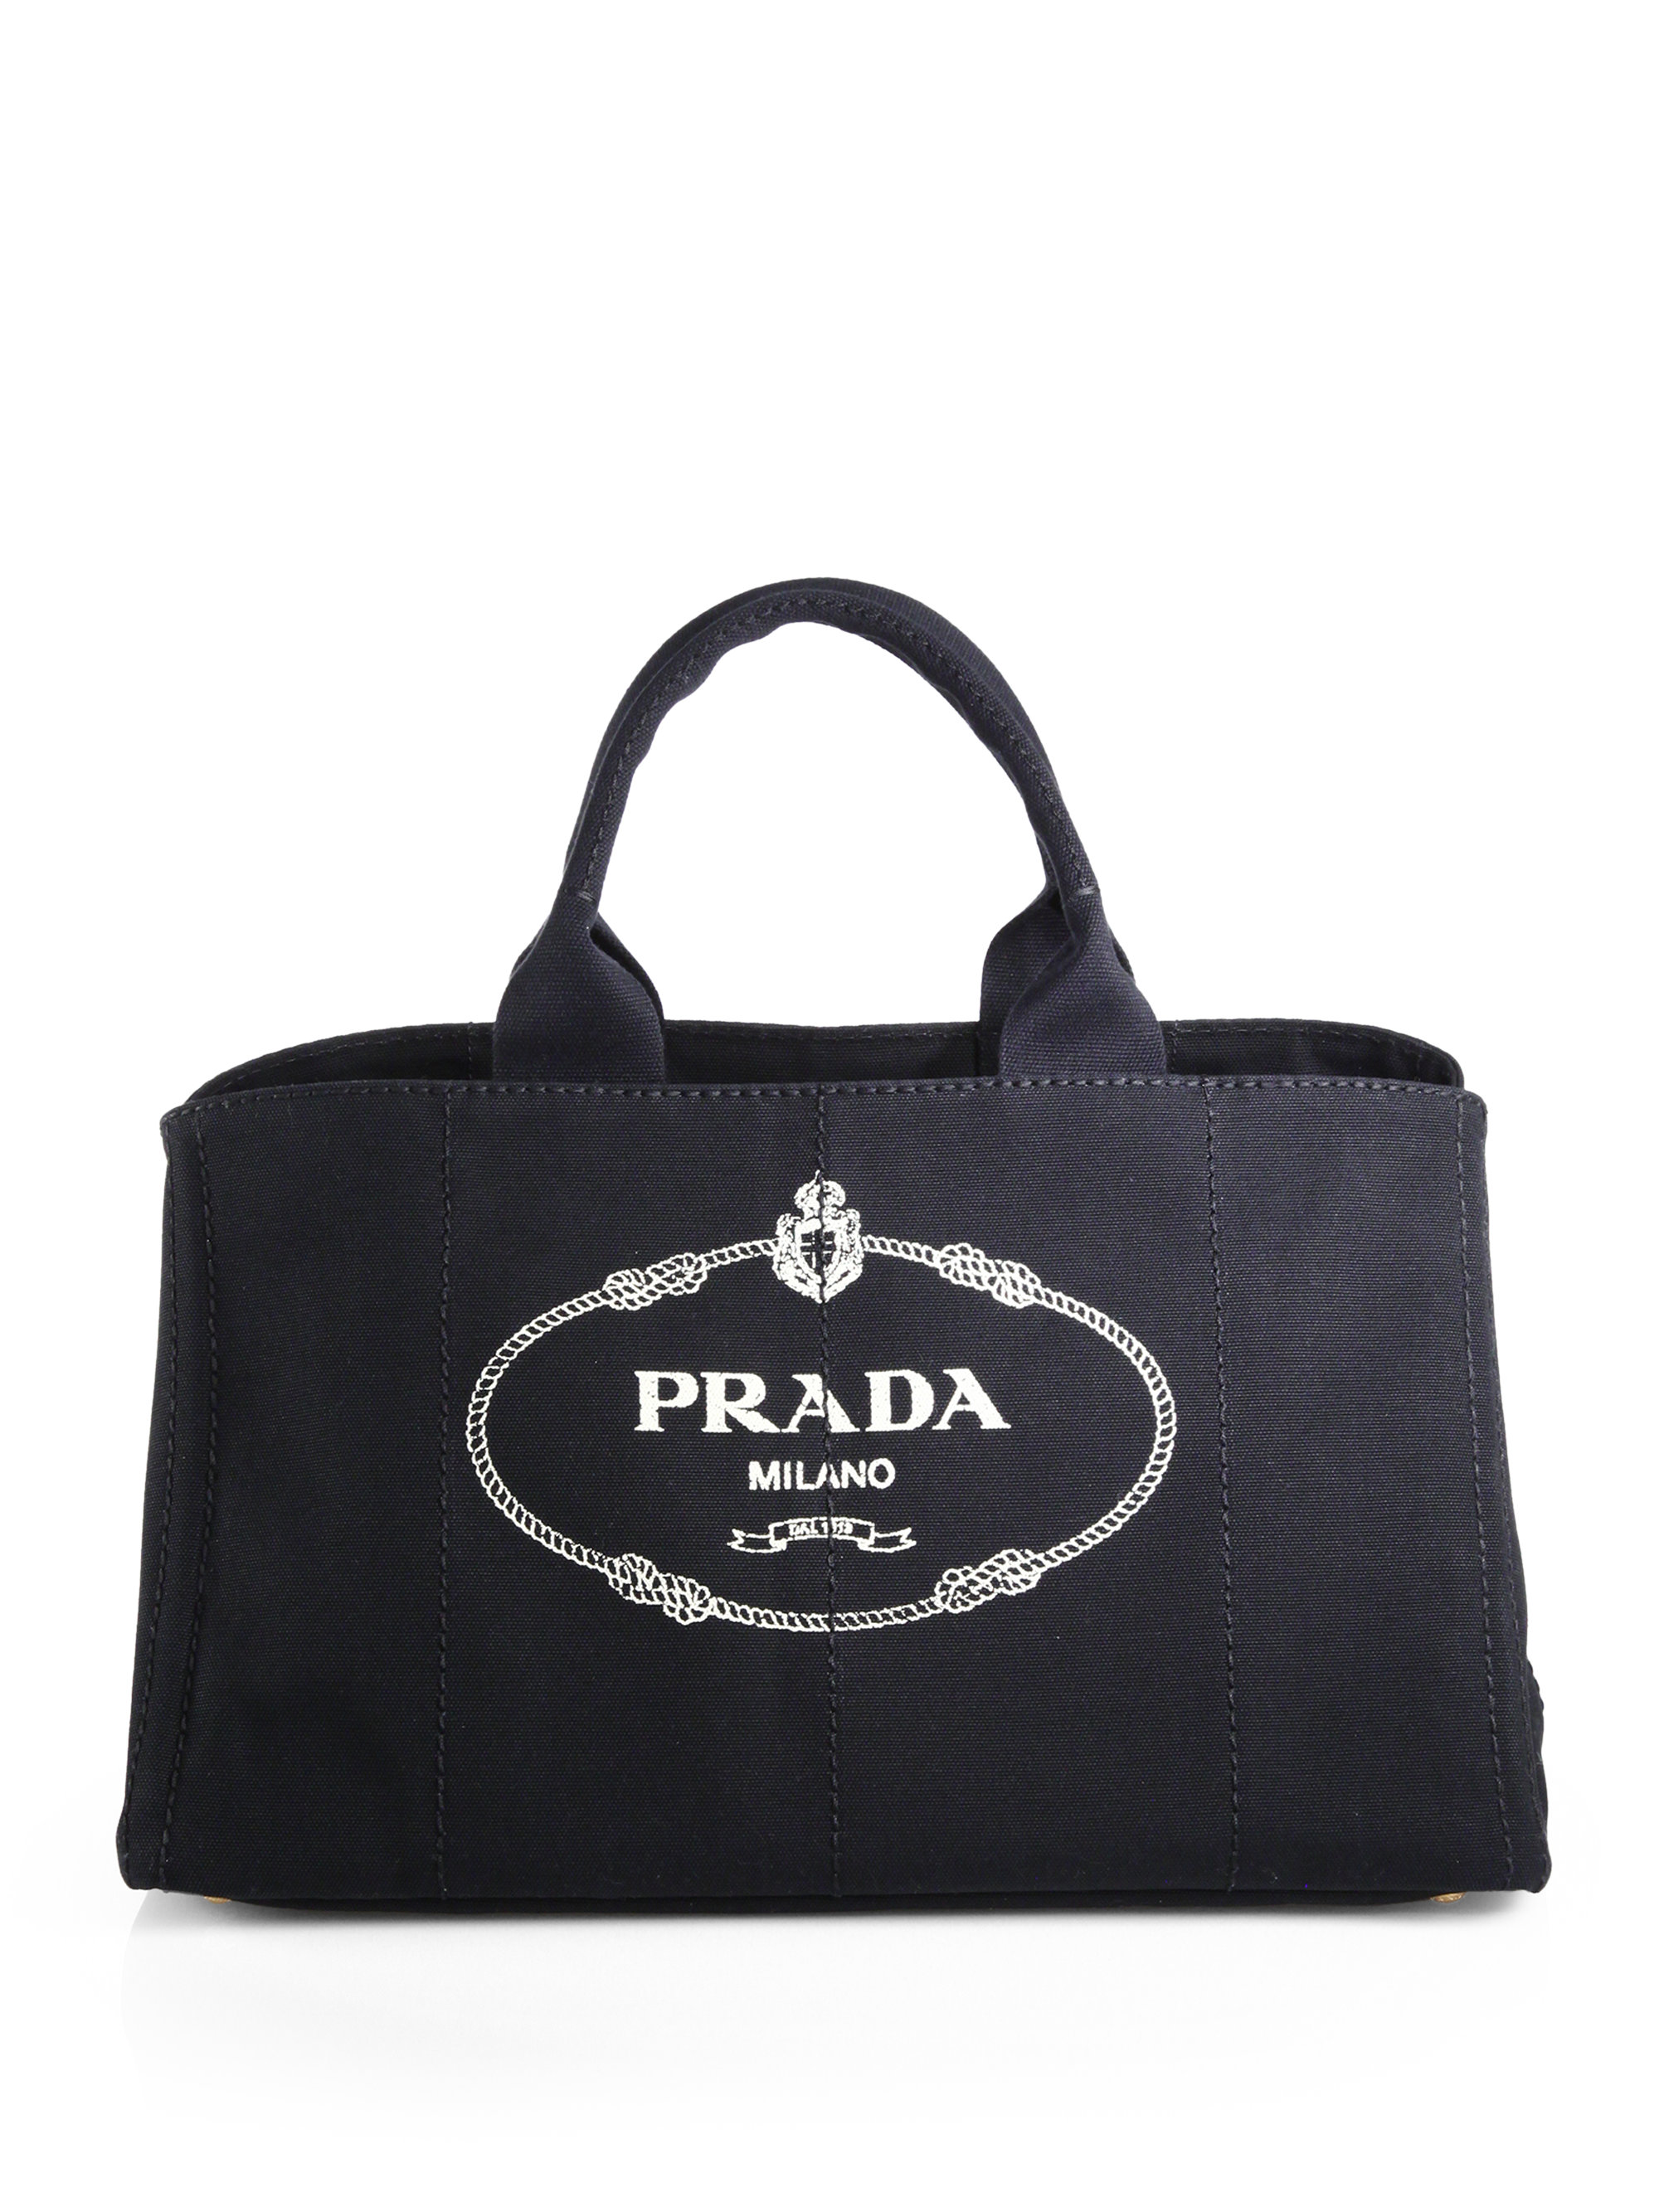 Prada Logo Printed Large Canvas Tote in Black | Lyst